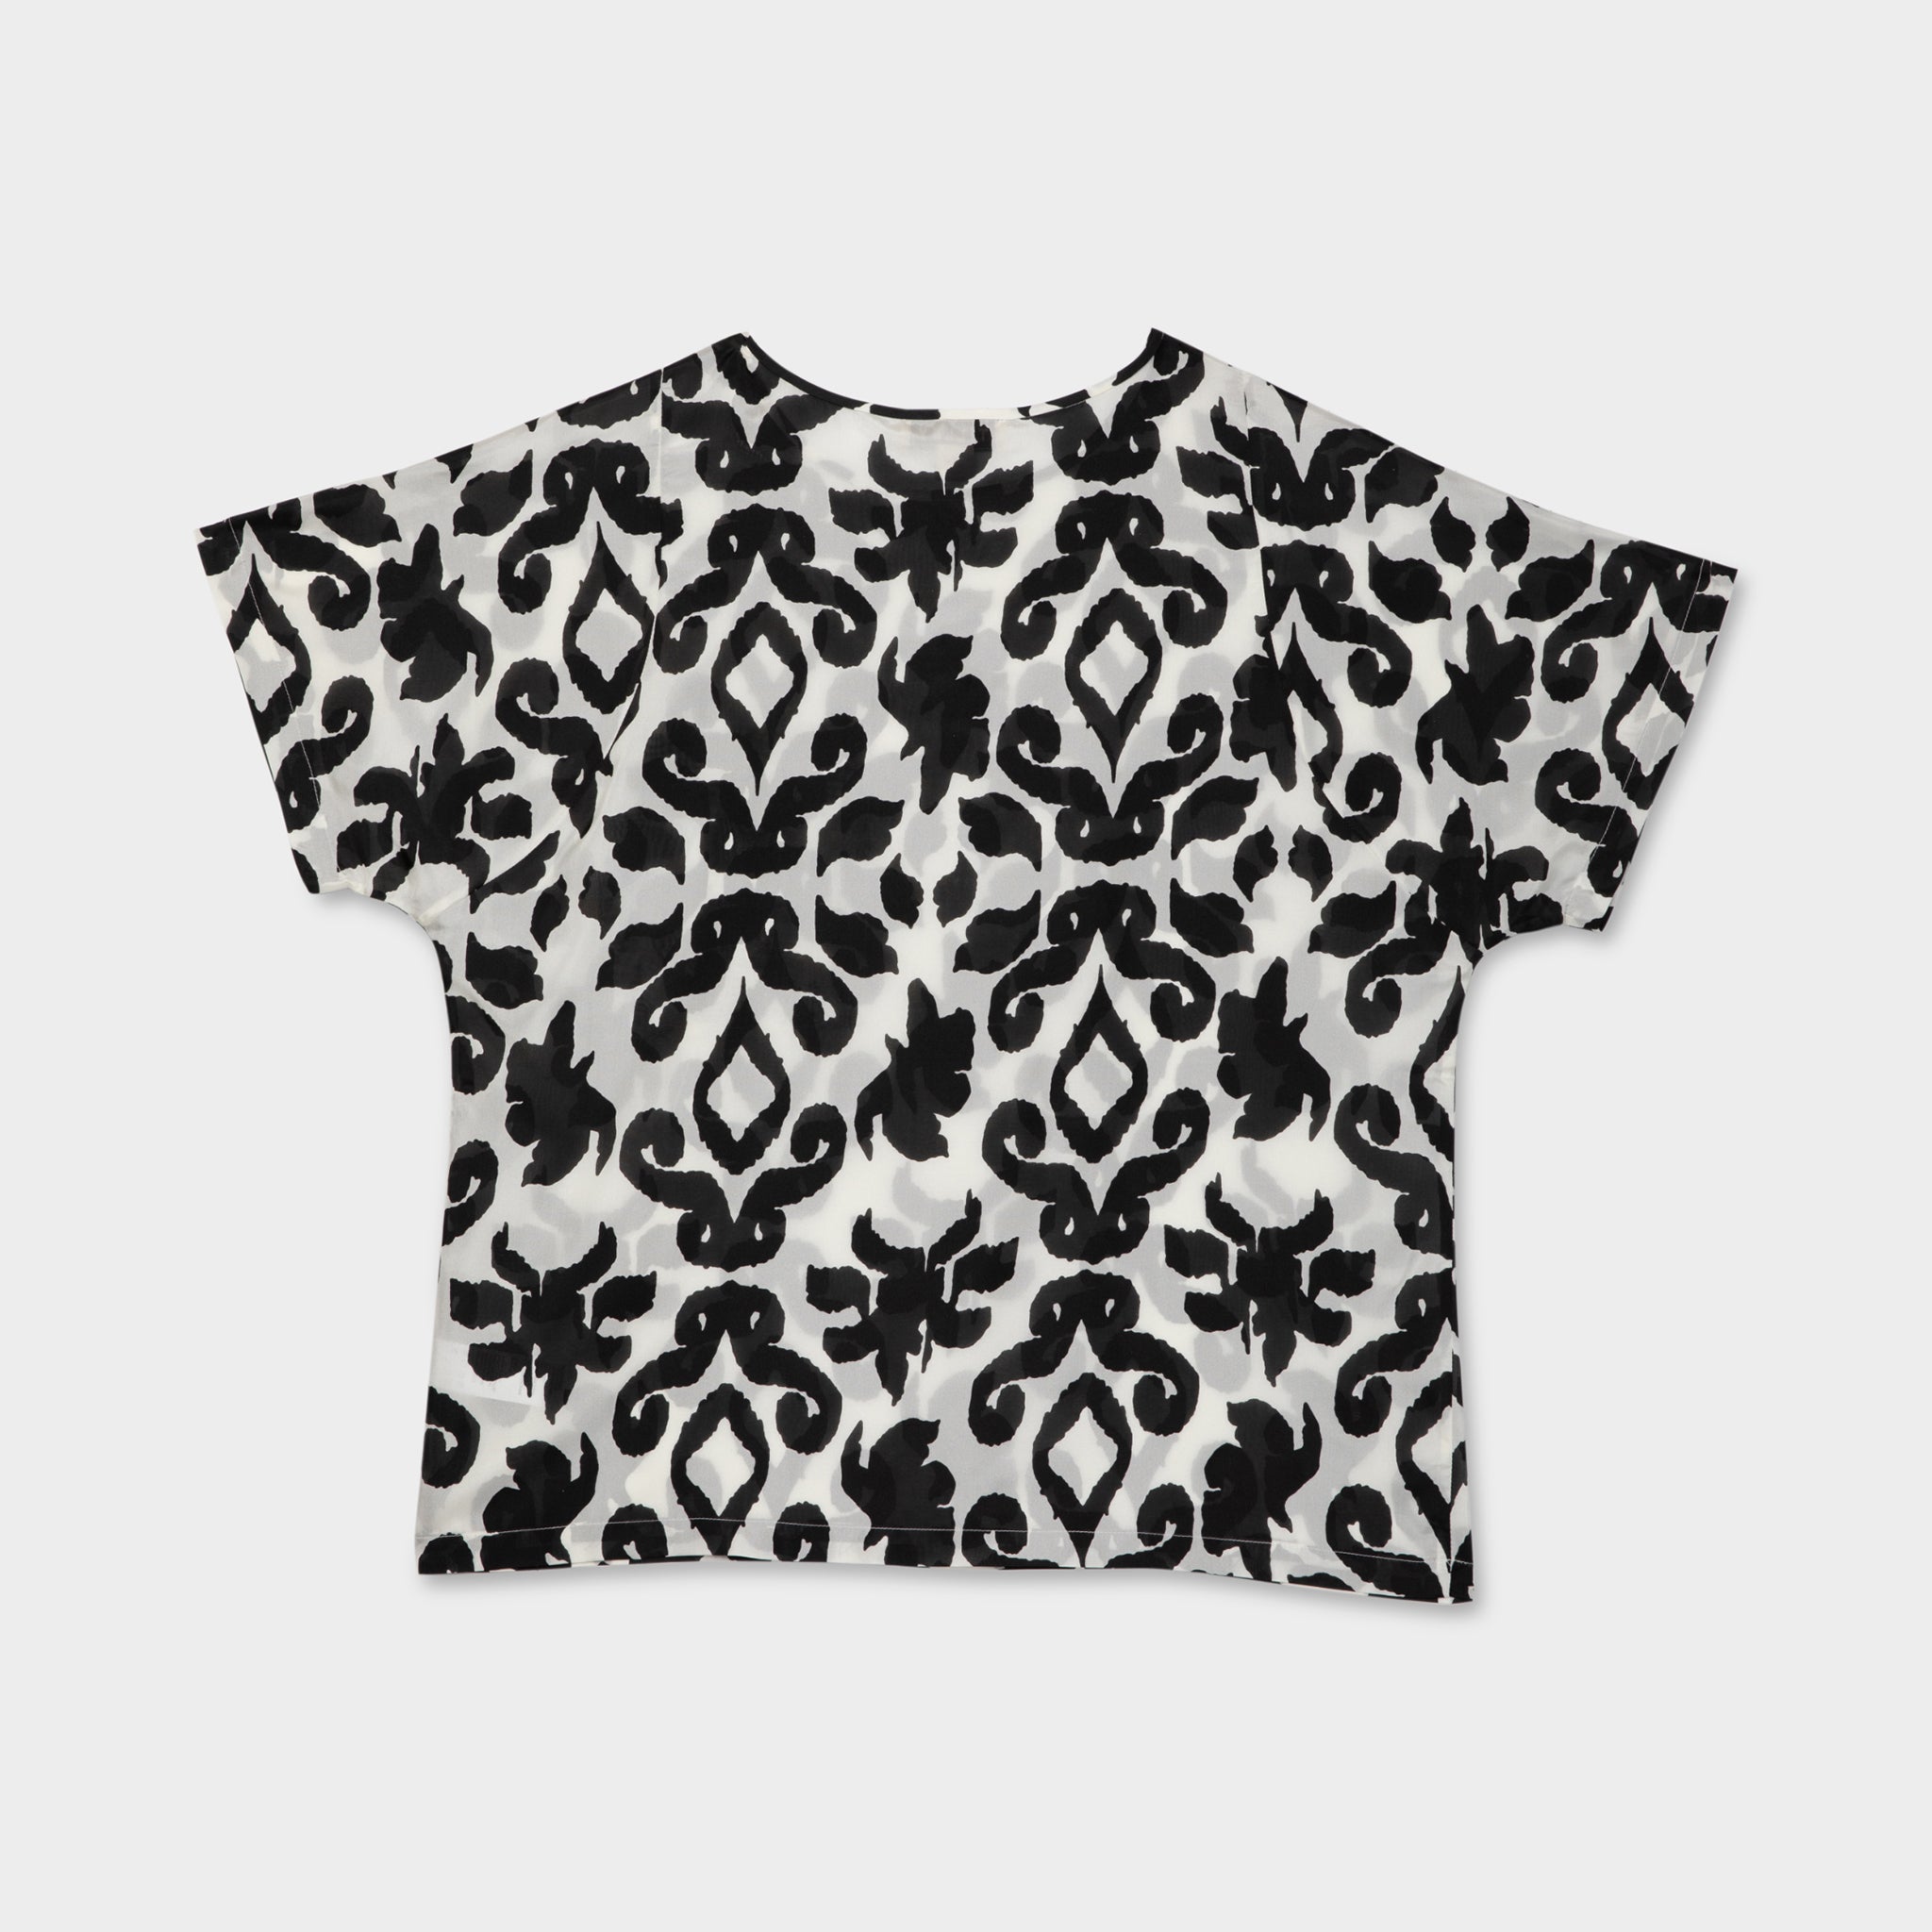 Elainilye Fashion Womens Shirt Graphic Printed Long Sleeve Round-Neck  Hoodless Sweatshirt Tops Blouse 